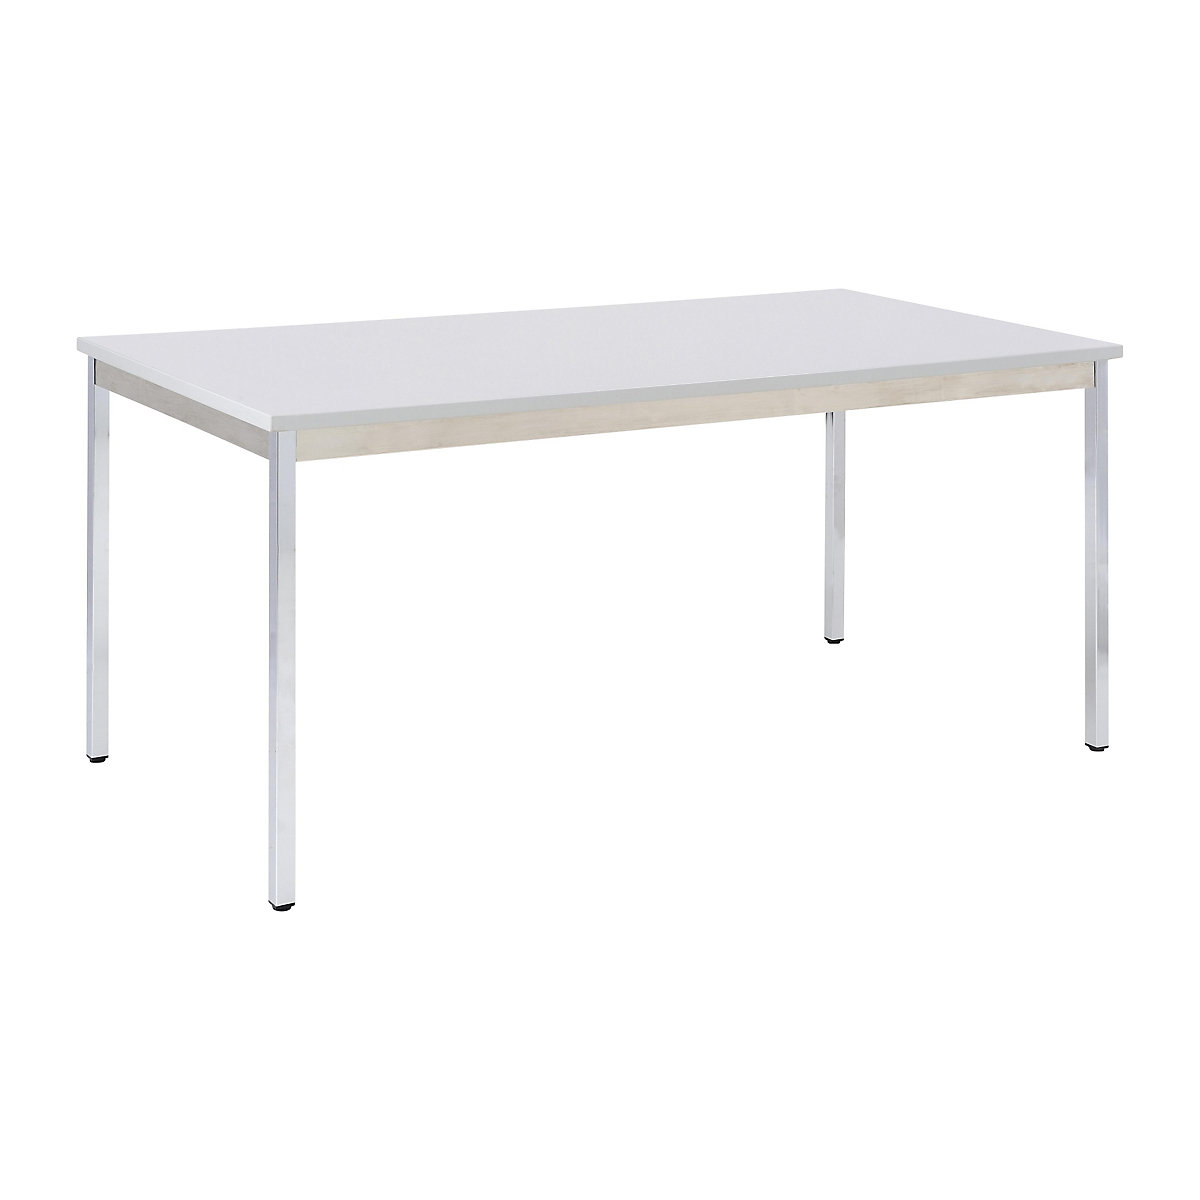 Universele tafel – eurokraft basic, rechthoekig, b x h = 1200 x 740 mm, diepte 600 mm, blad lichtgrijs, frame verchroomd